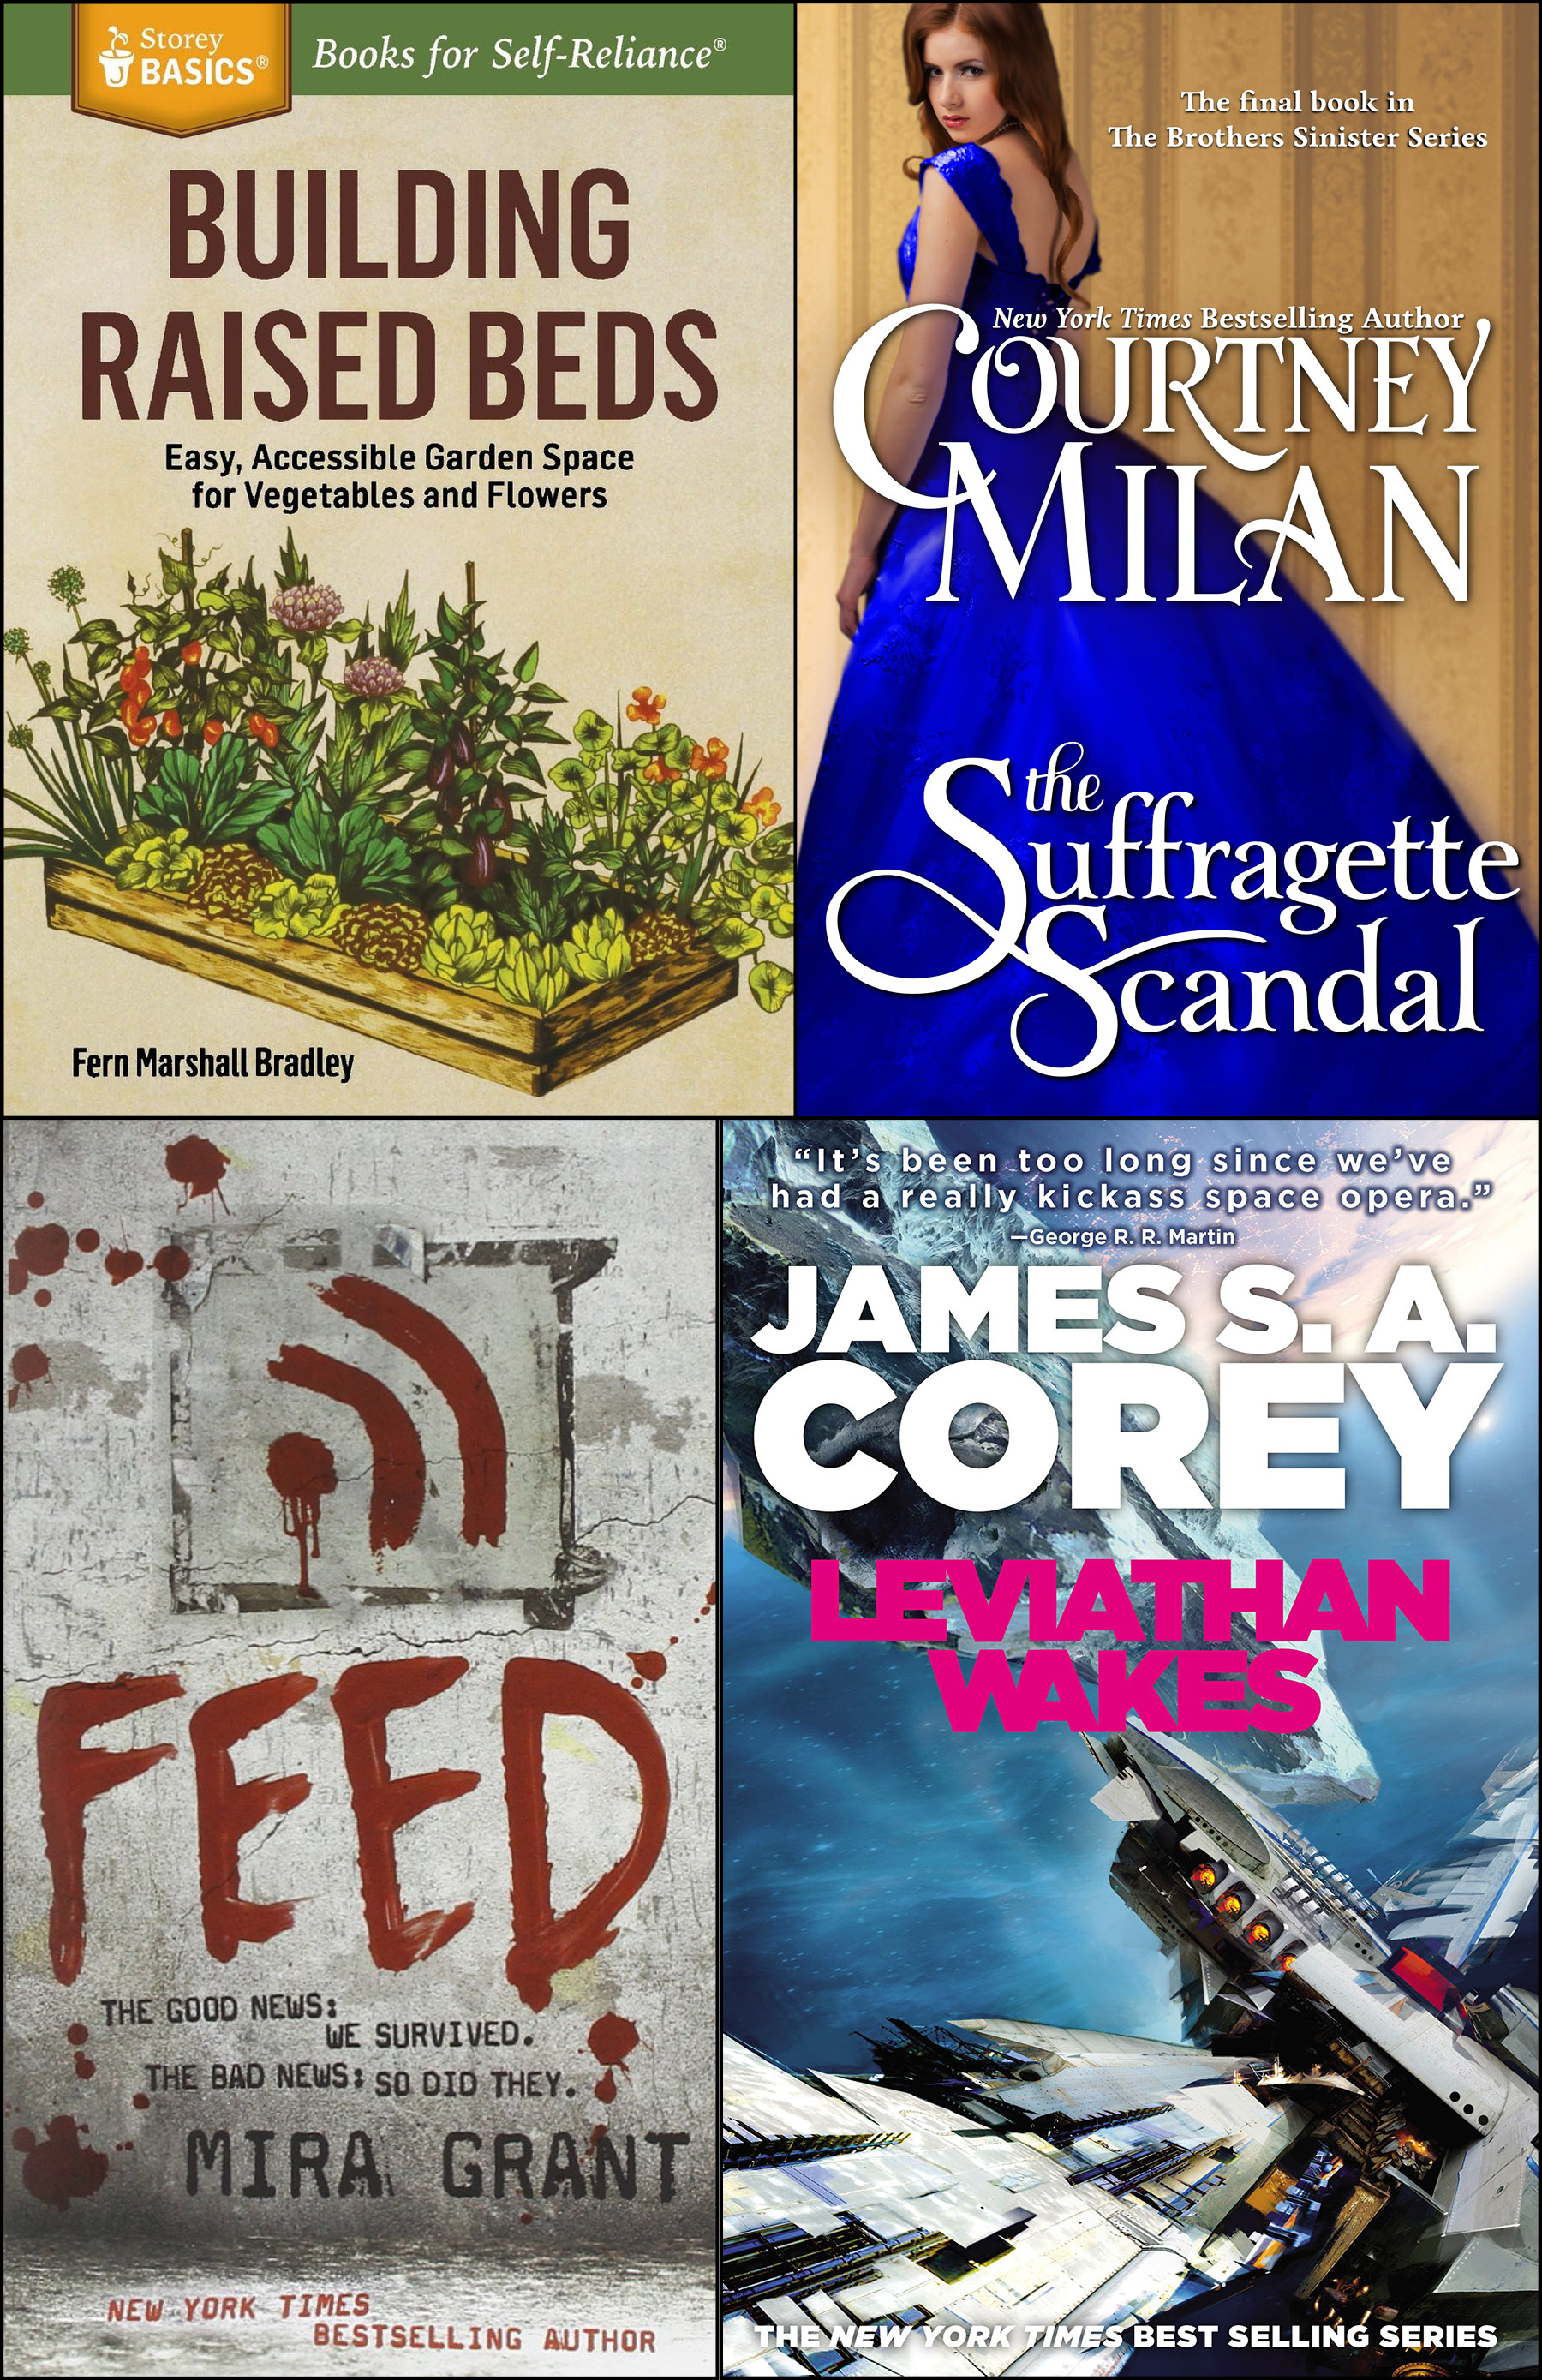 Gardening, romance, horror, sci-fi: Spring reading